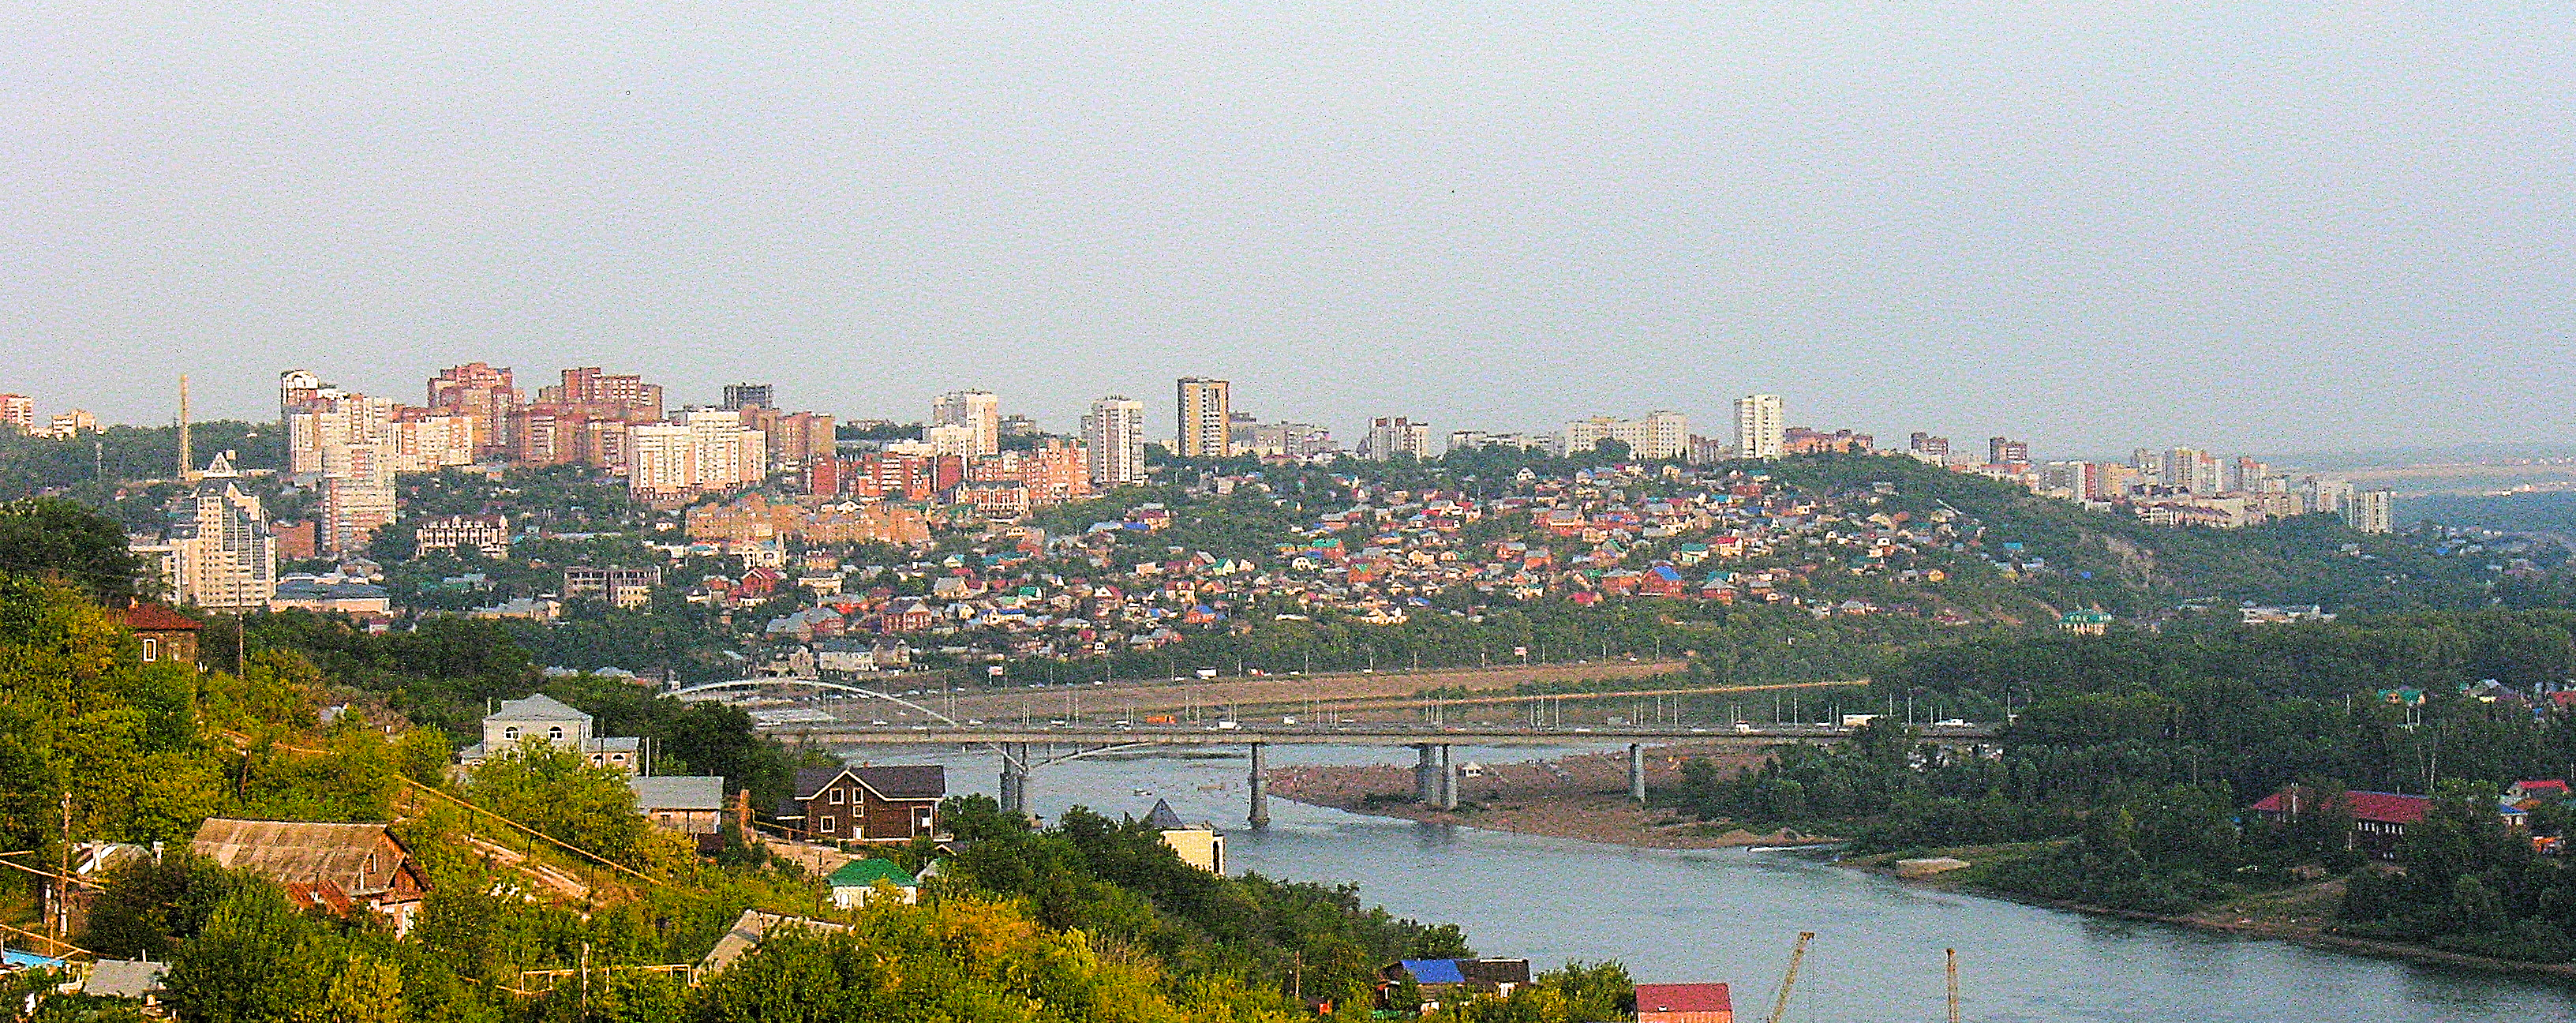 File:Panoramic view of Belaya River (Ufa).png - Wikimedia Commons